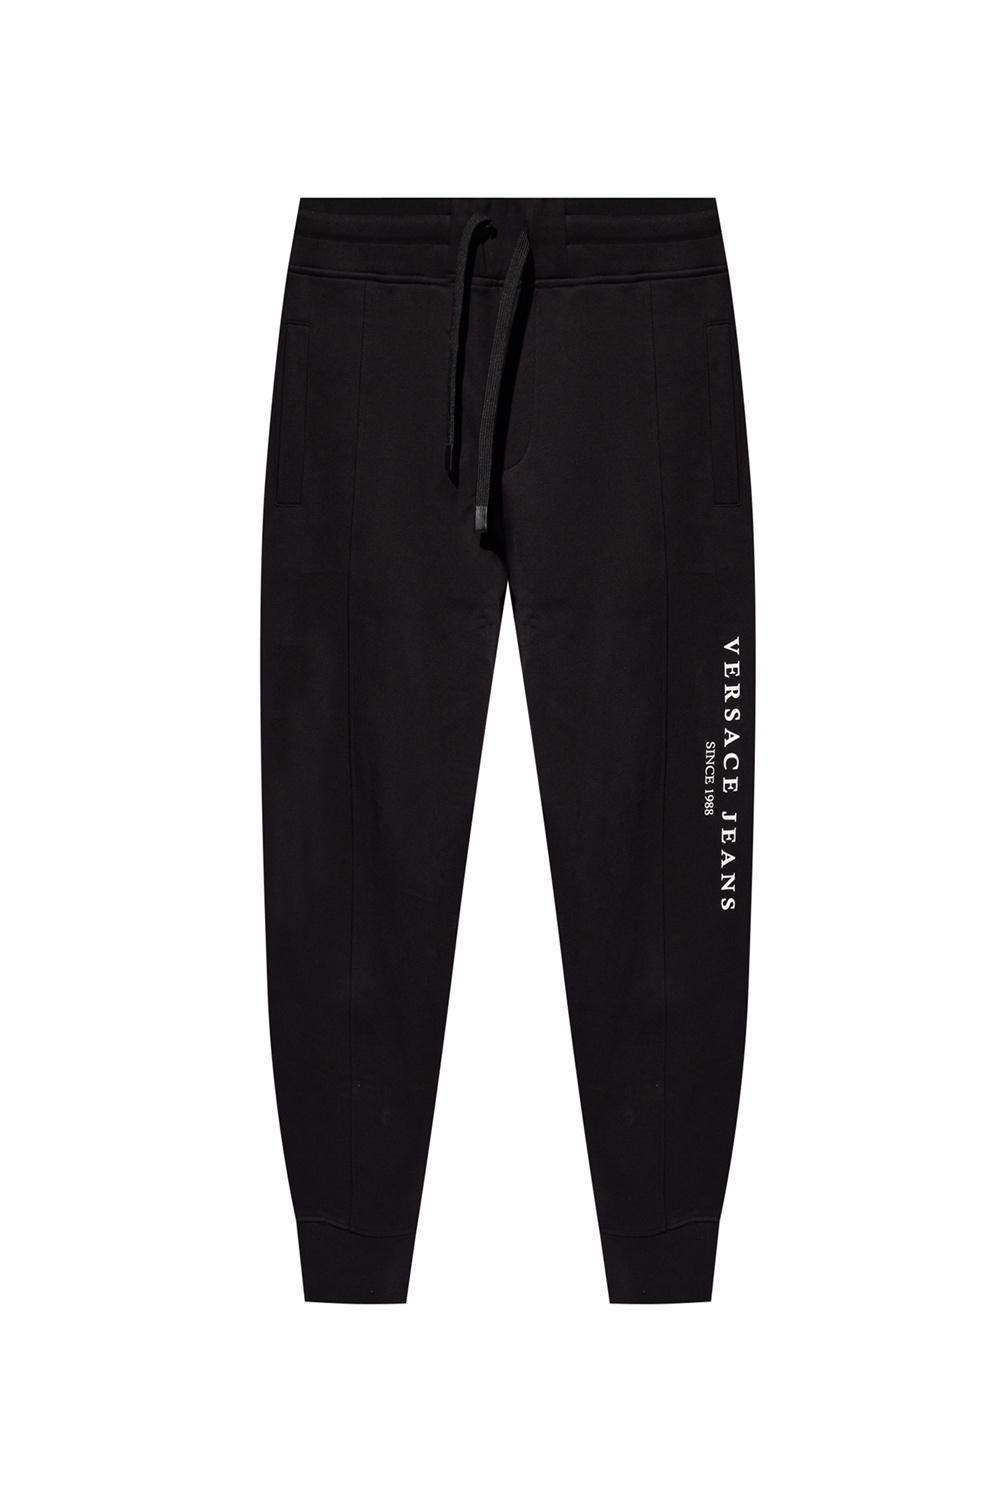 New Balance 7 Inch Shorts Printed sweatpants